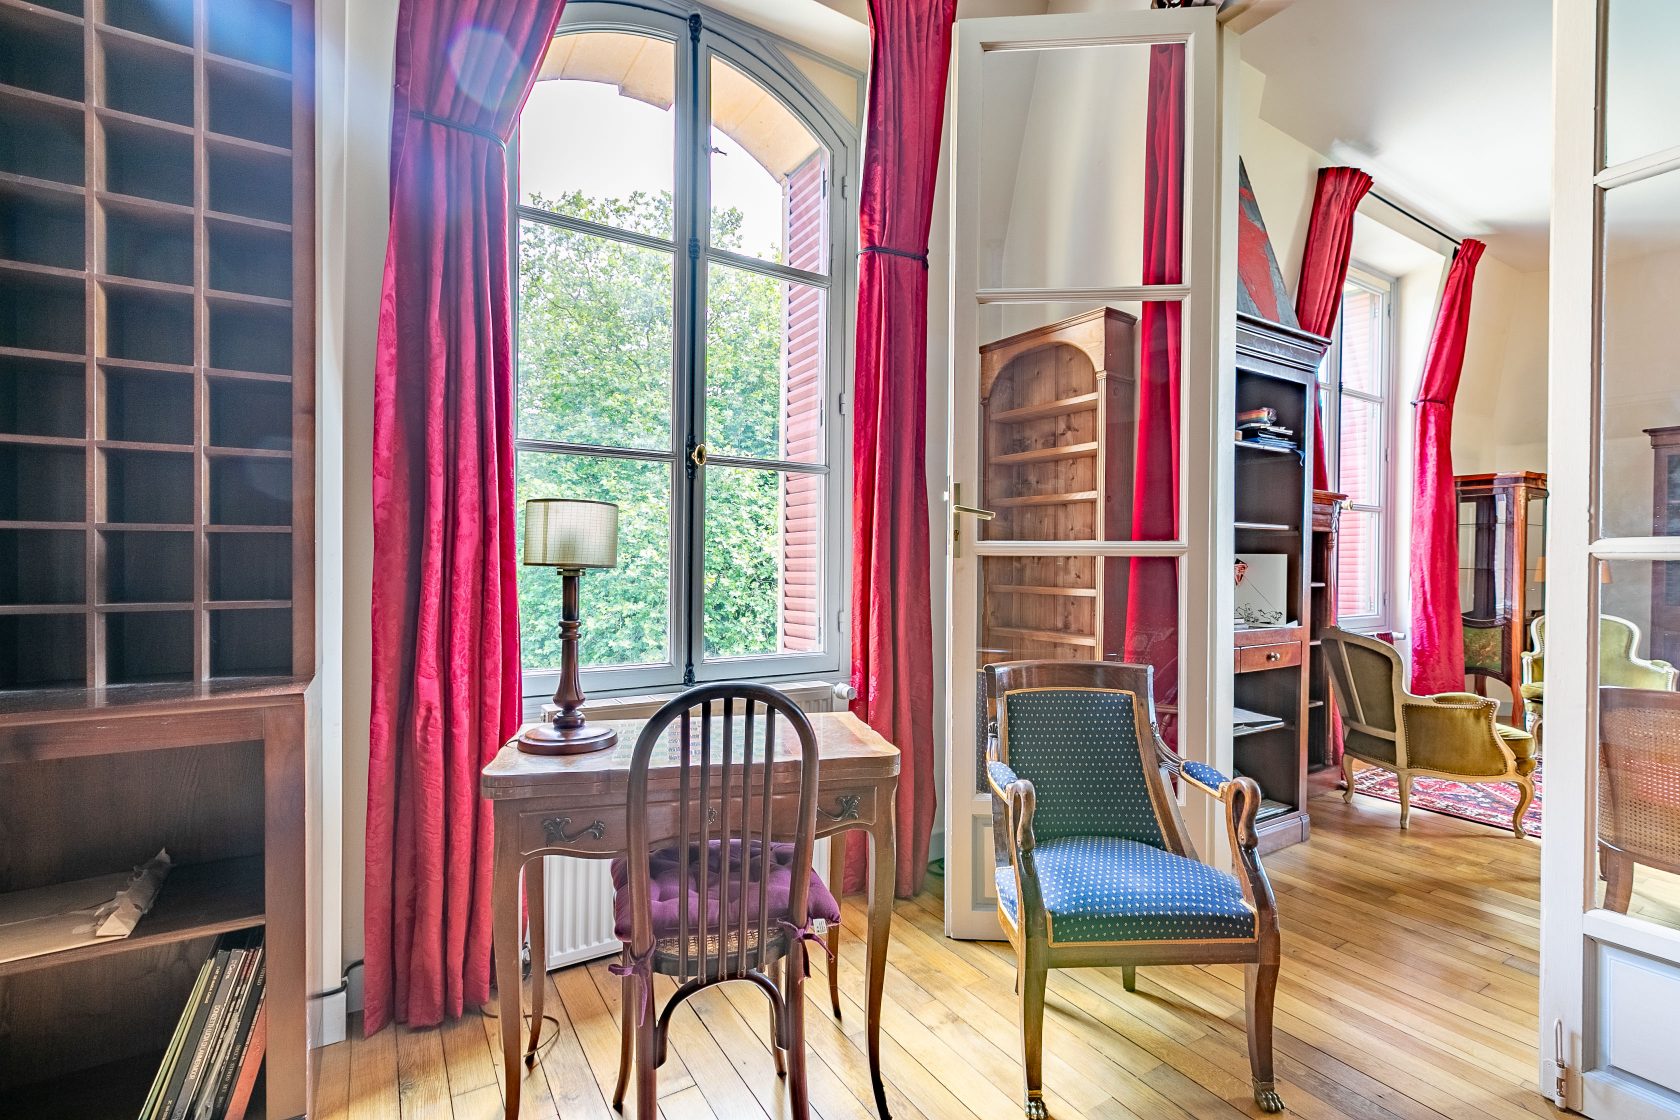 The elegant – Very beautiful Haussmannian apartment in the heart of the Château de Villette